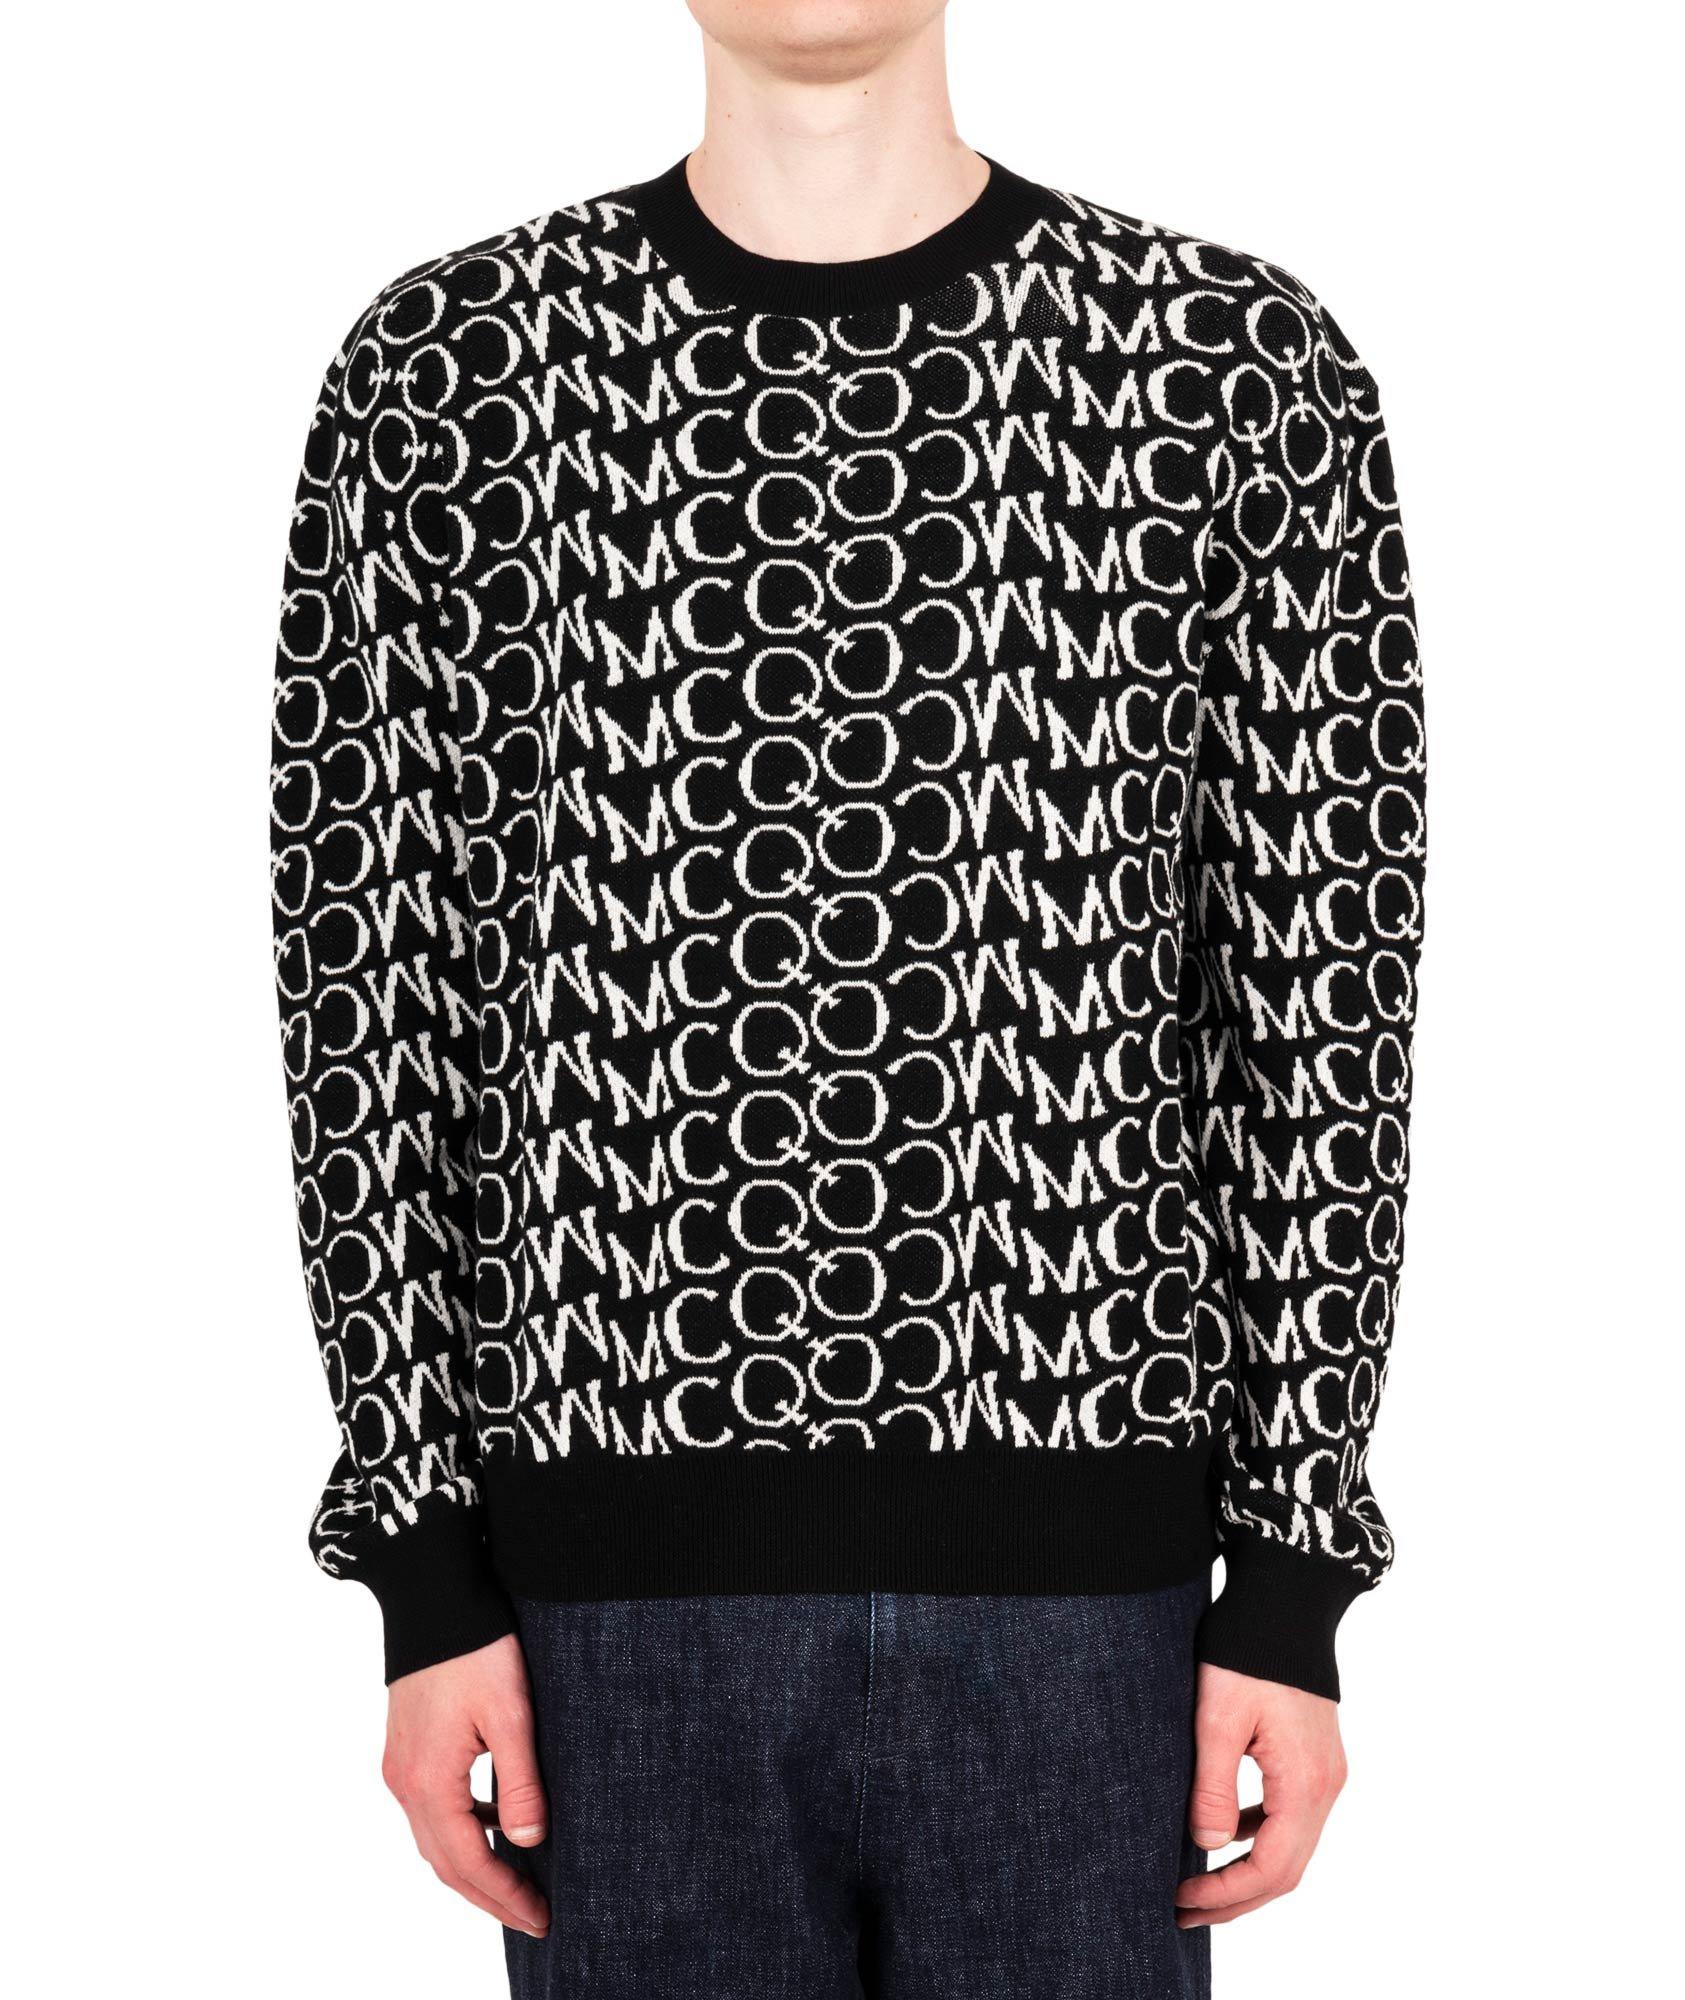 Printed Wool-Blend Sweater image 0